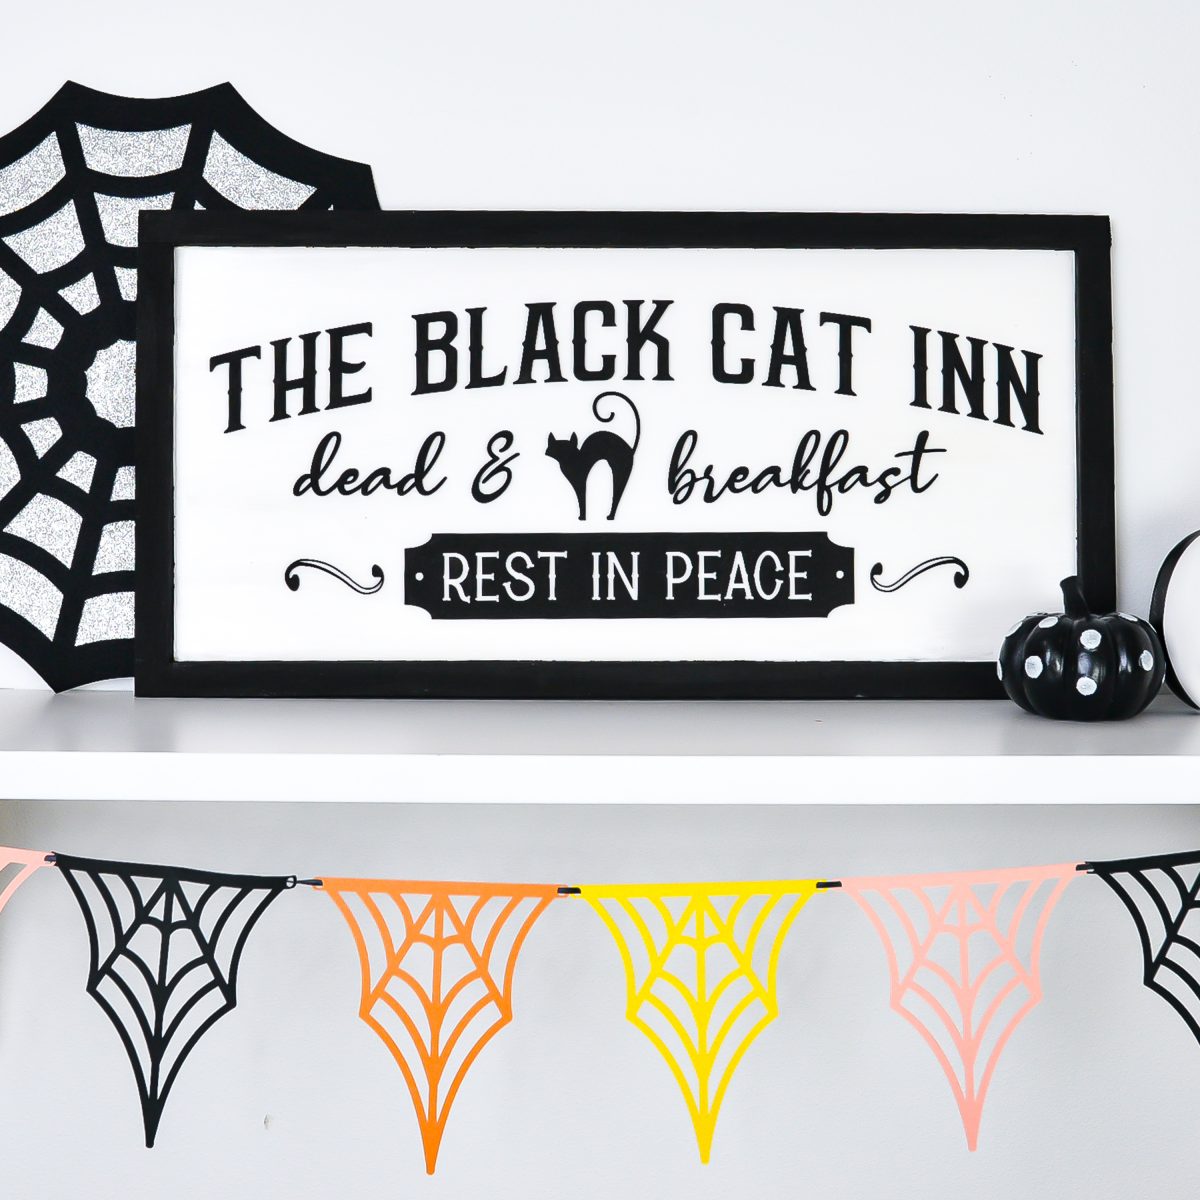 Vintage Halloween Sign: Black Cat Inn sign styled on shelf with Halloween decor